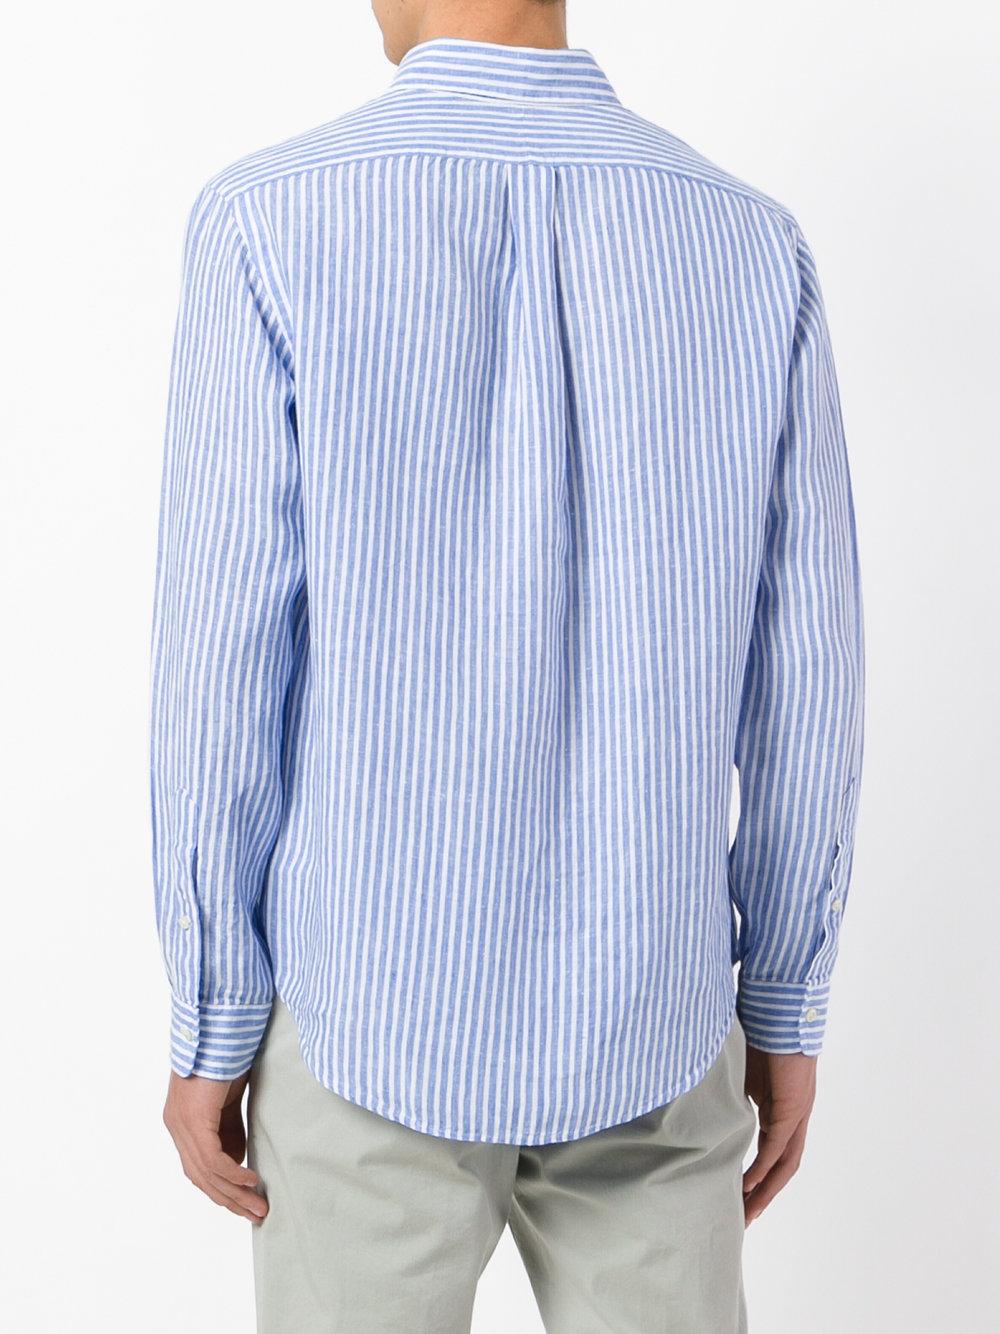 Polo Ralph Lauren Striped Button-down Shirt in Blue for Men - Lyst